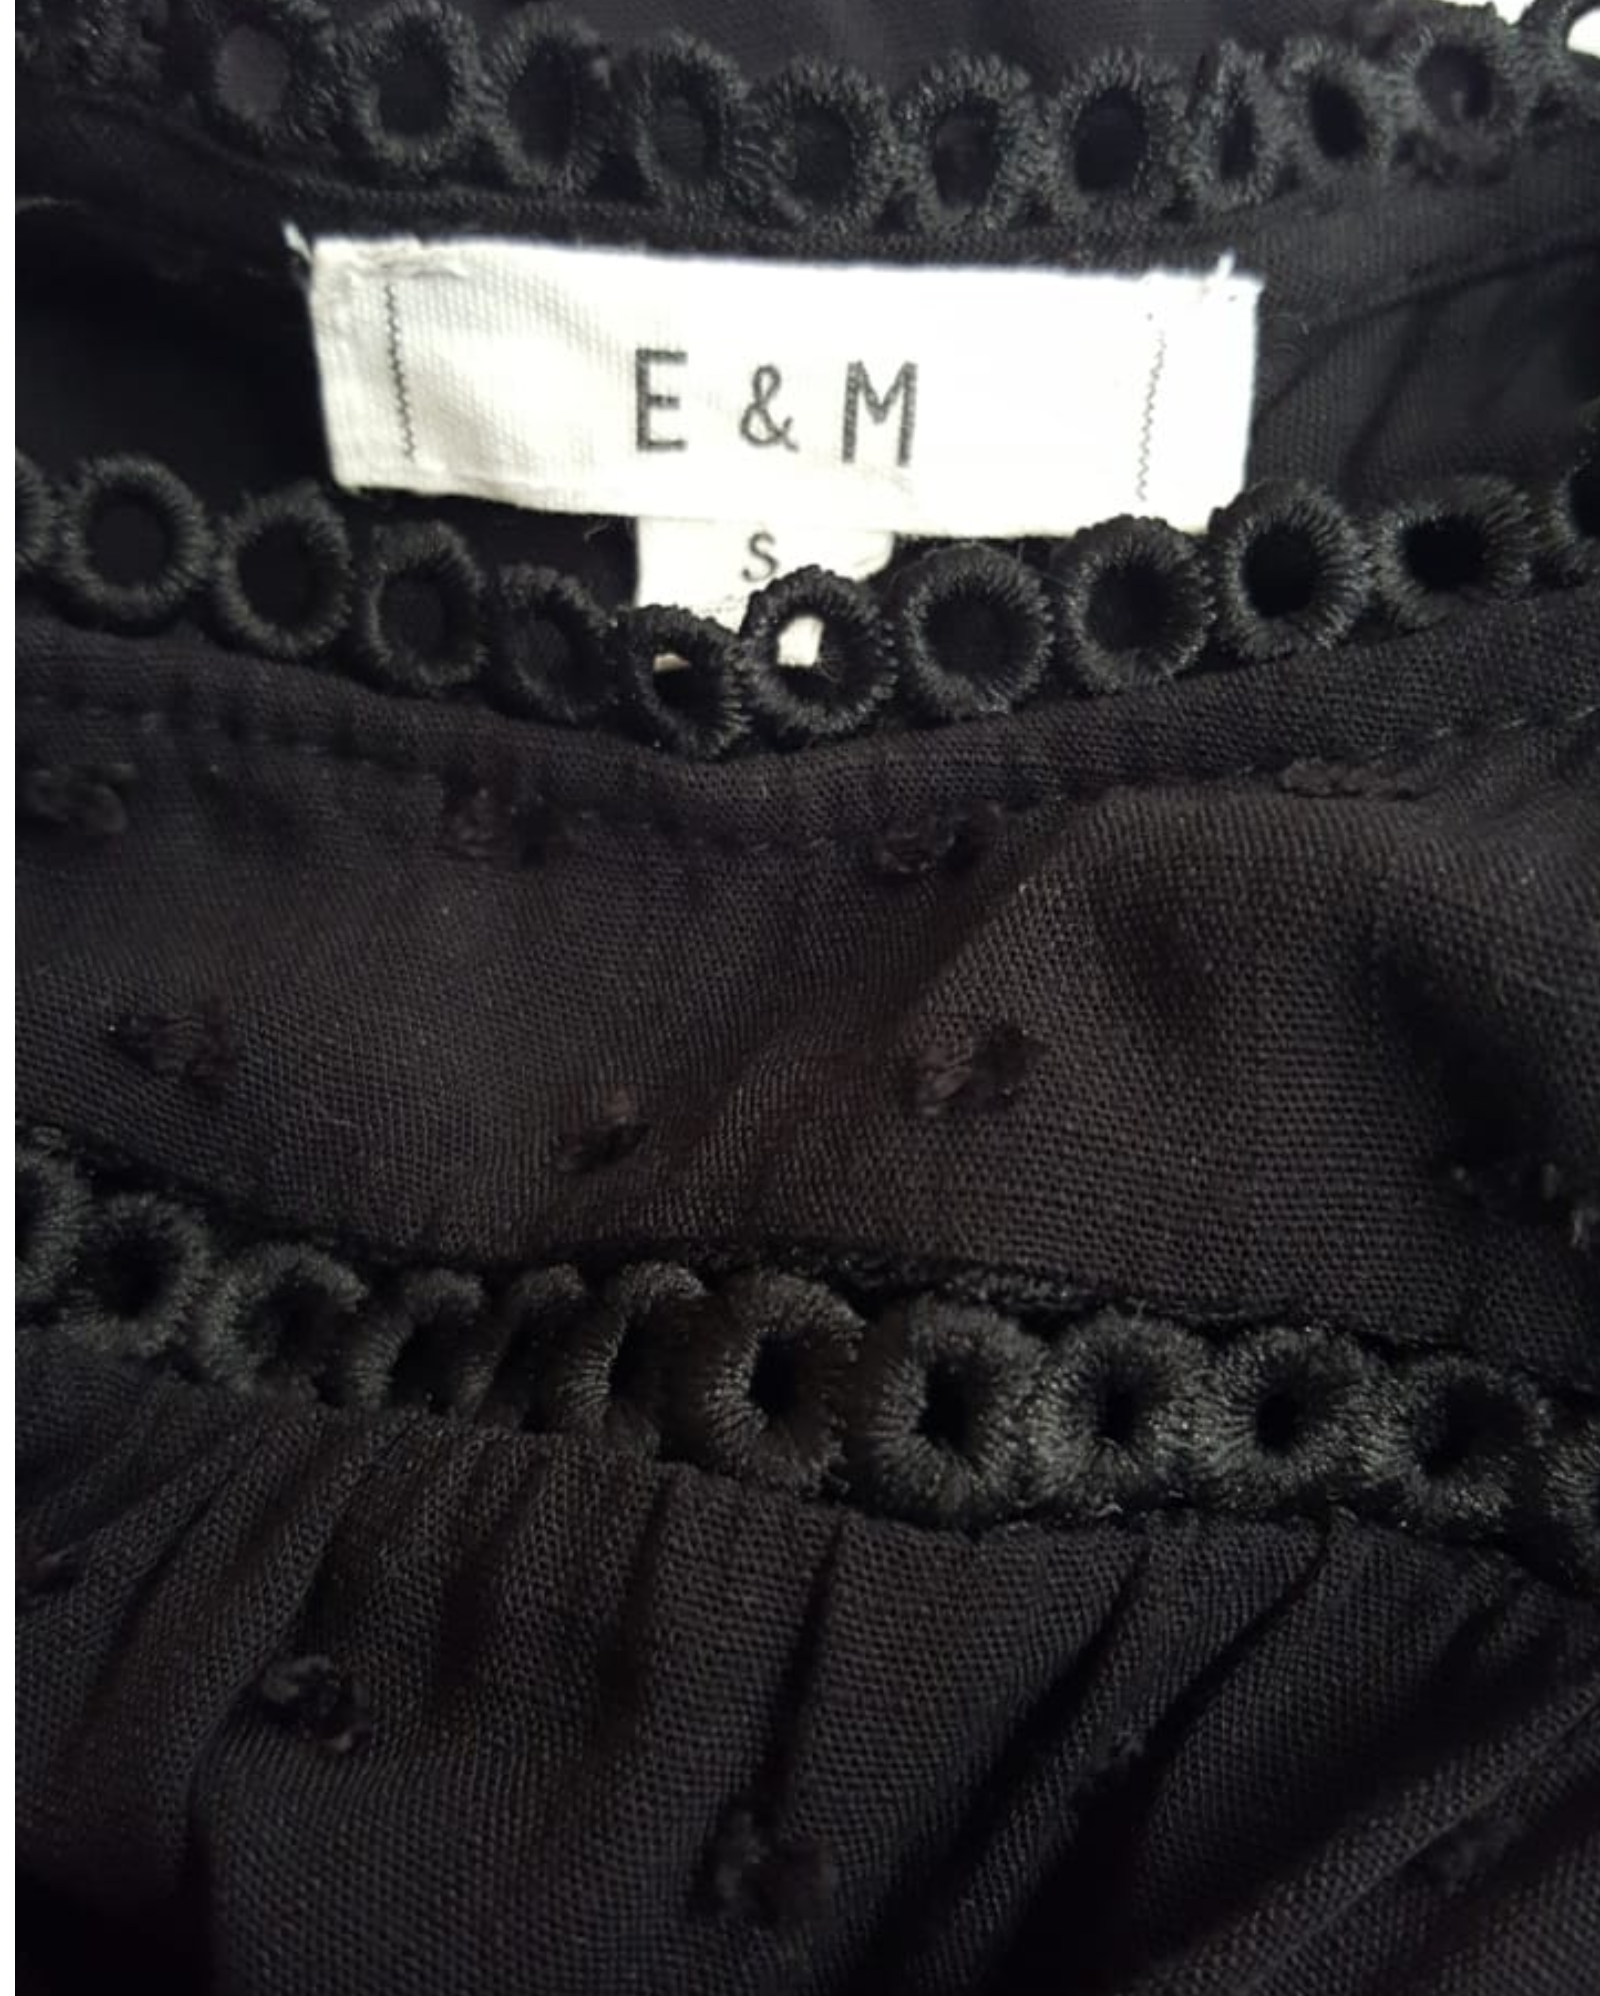 Blusas Casuales E & M